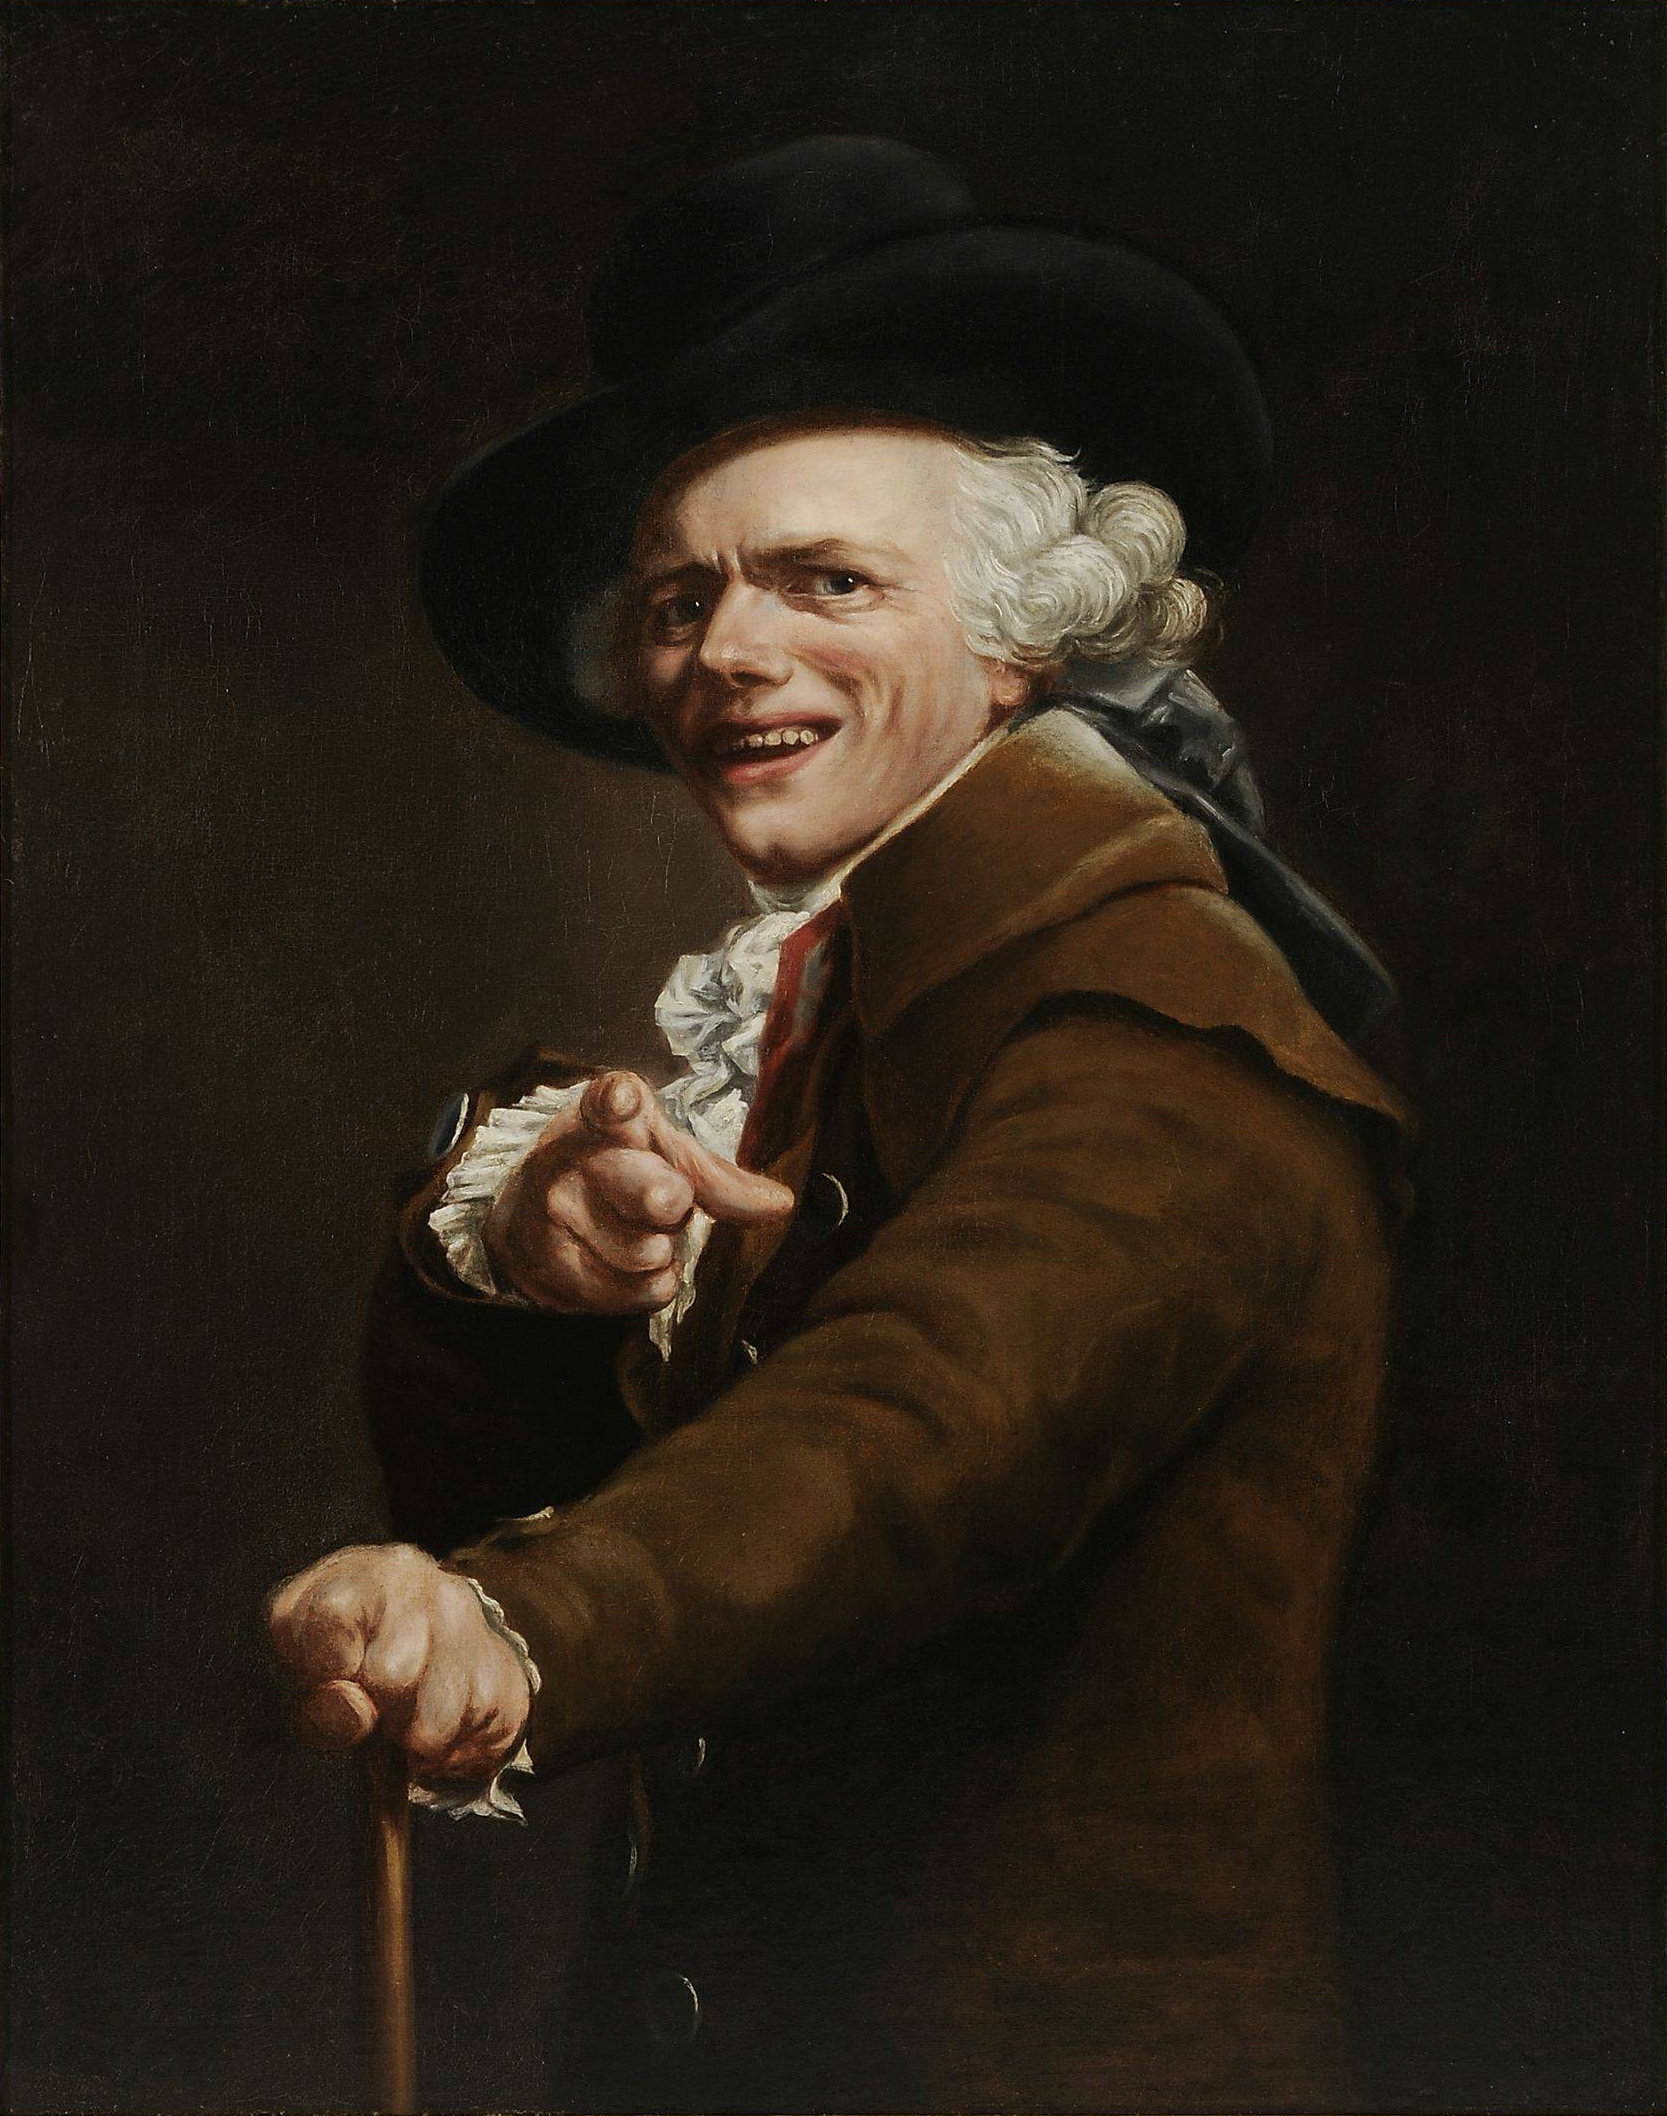 Joseph Ducreux - 26. Juni 1735 - 24. Juli 1802